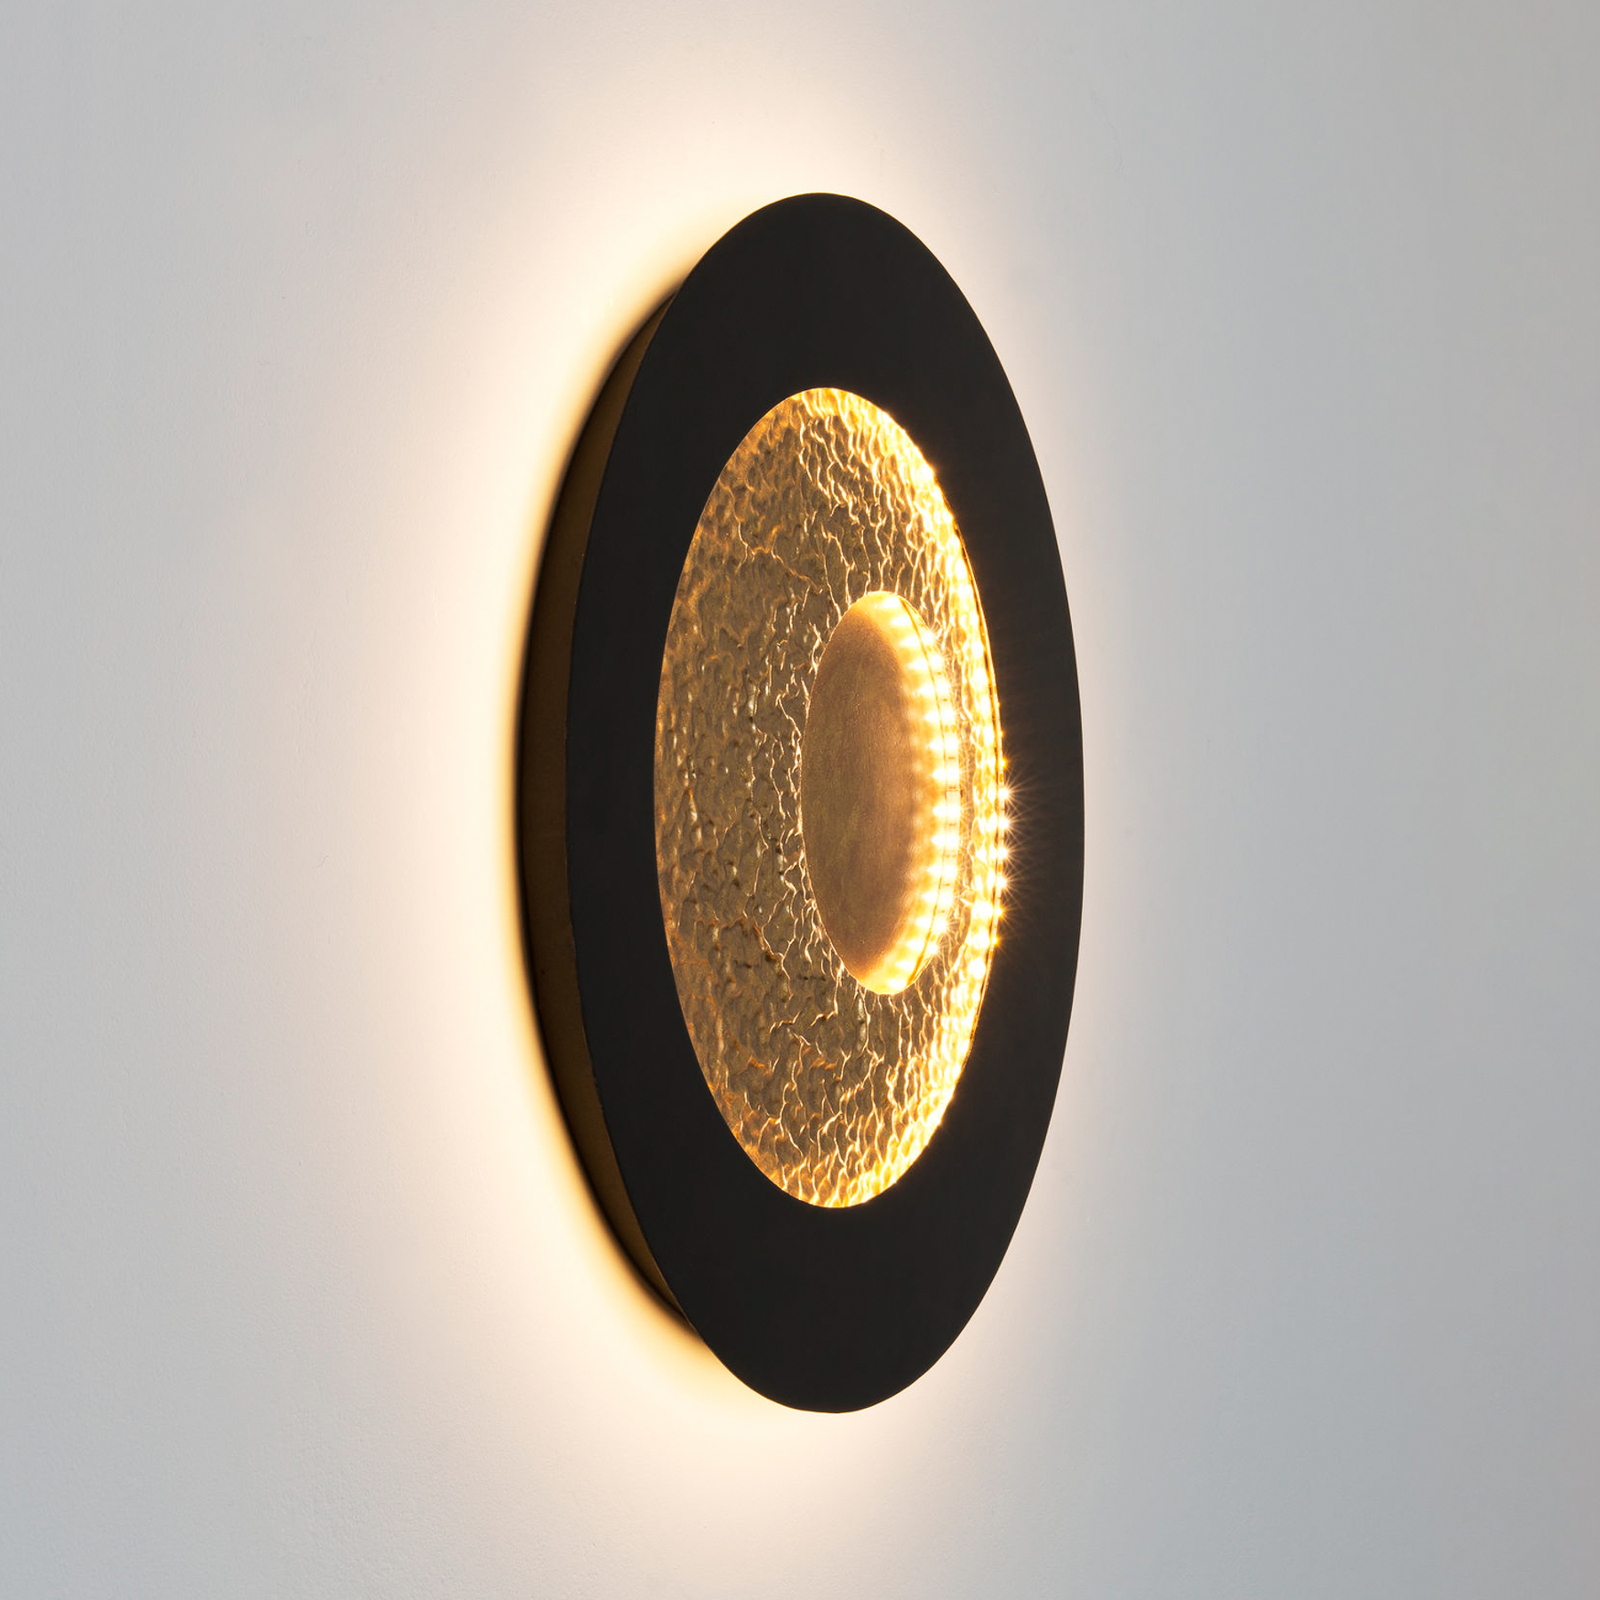 LED wall light Urano, brown-black/gold, Ø 60 cm, iron